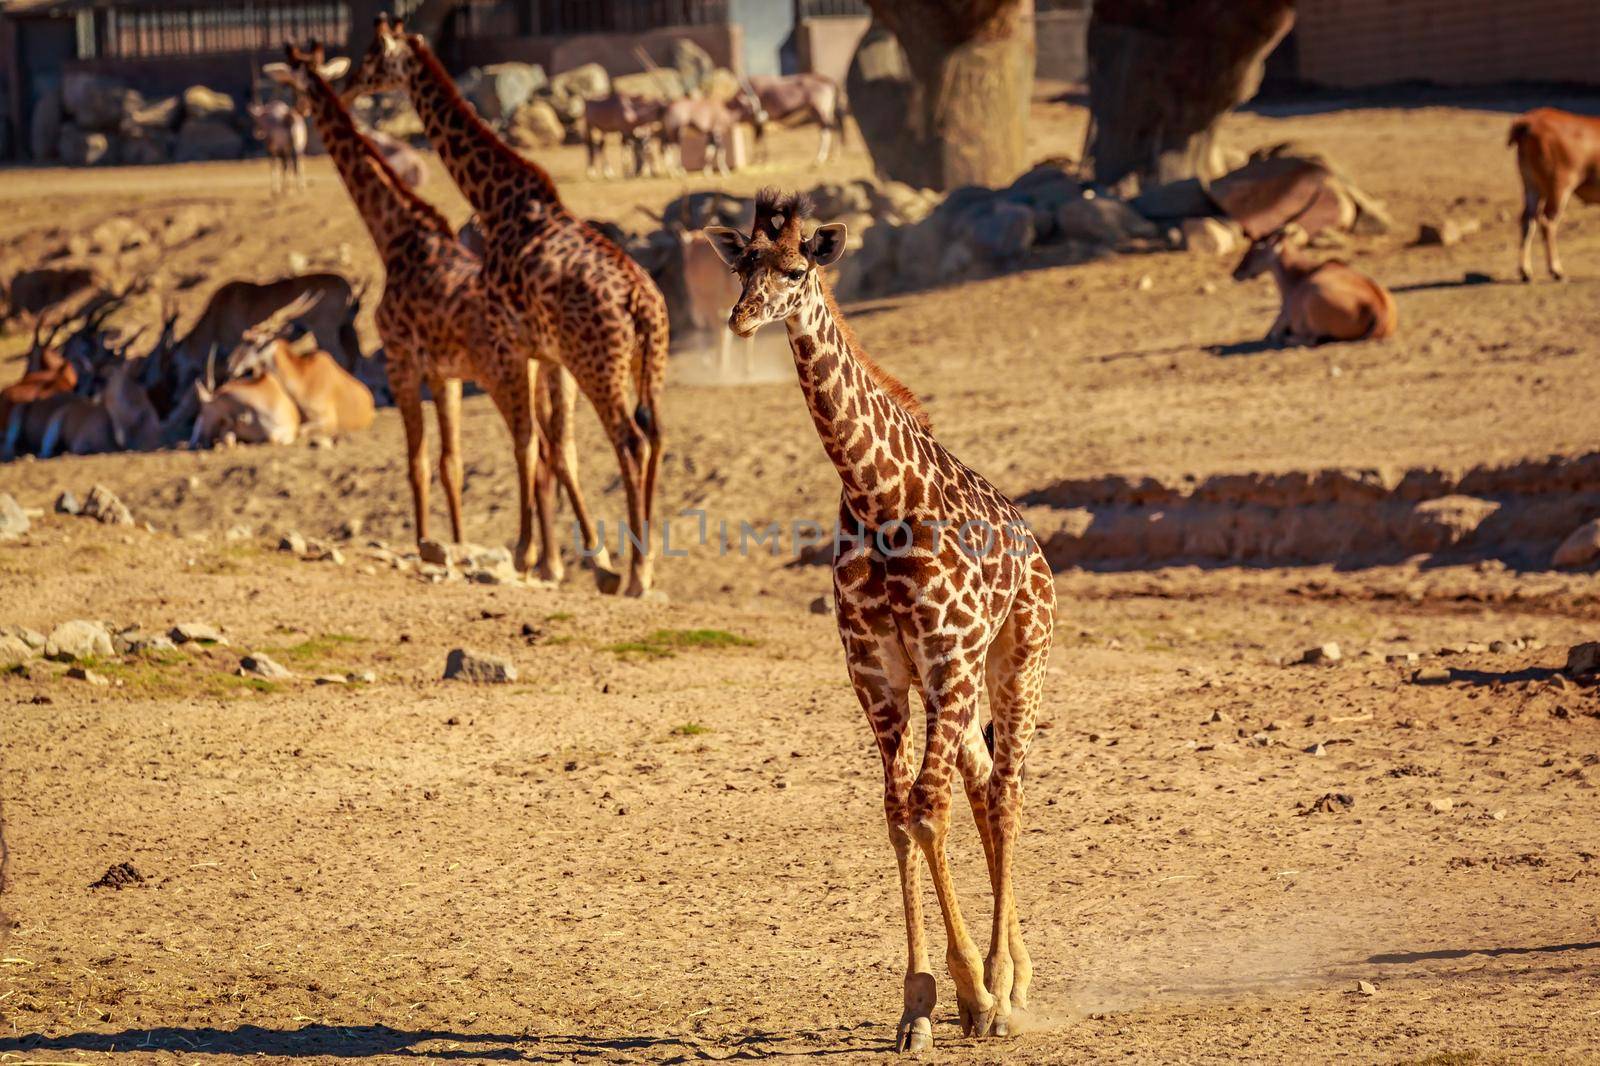 Giraffes walk in the park